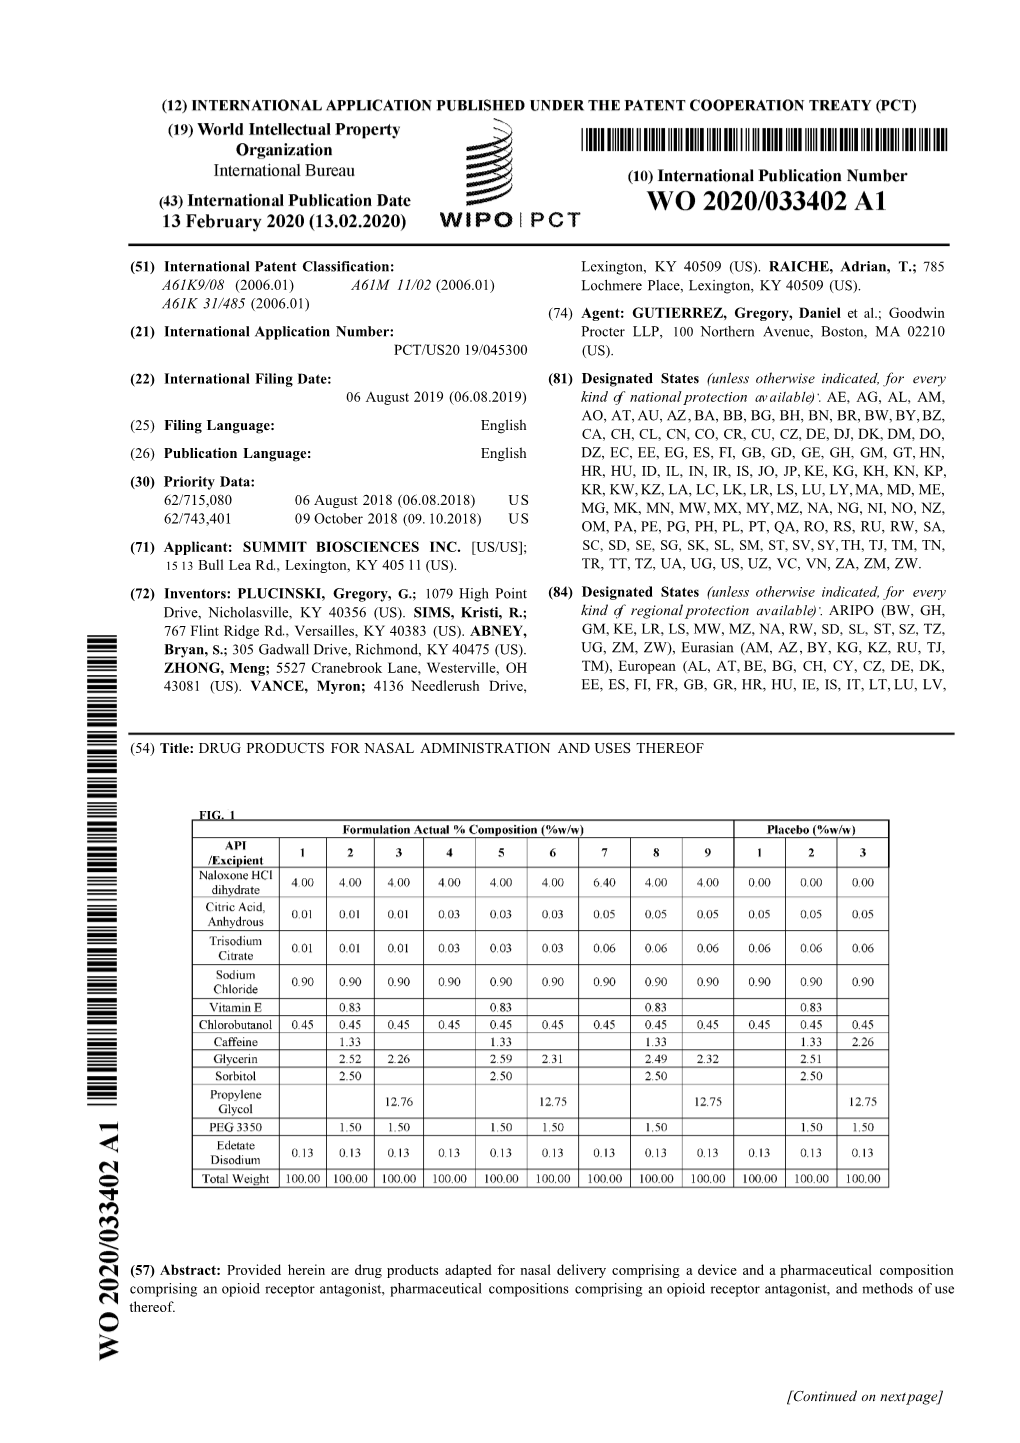 51) International Patent Classification: Lexington, KY 40509 (US